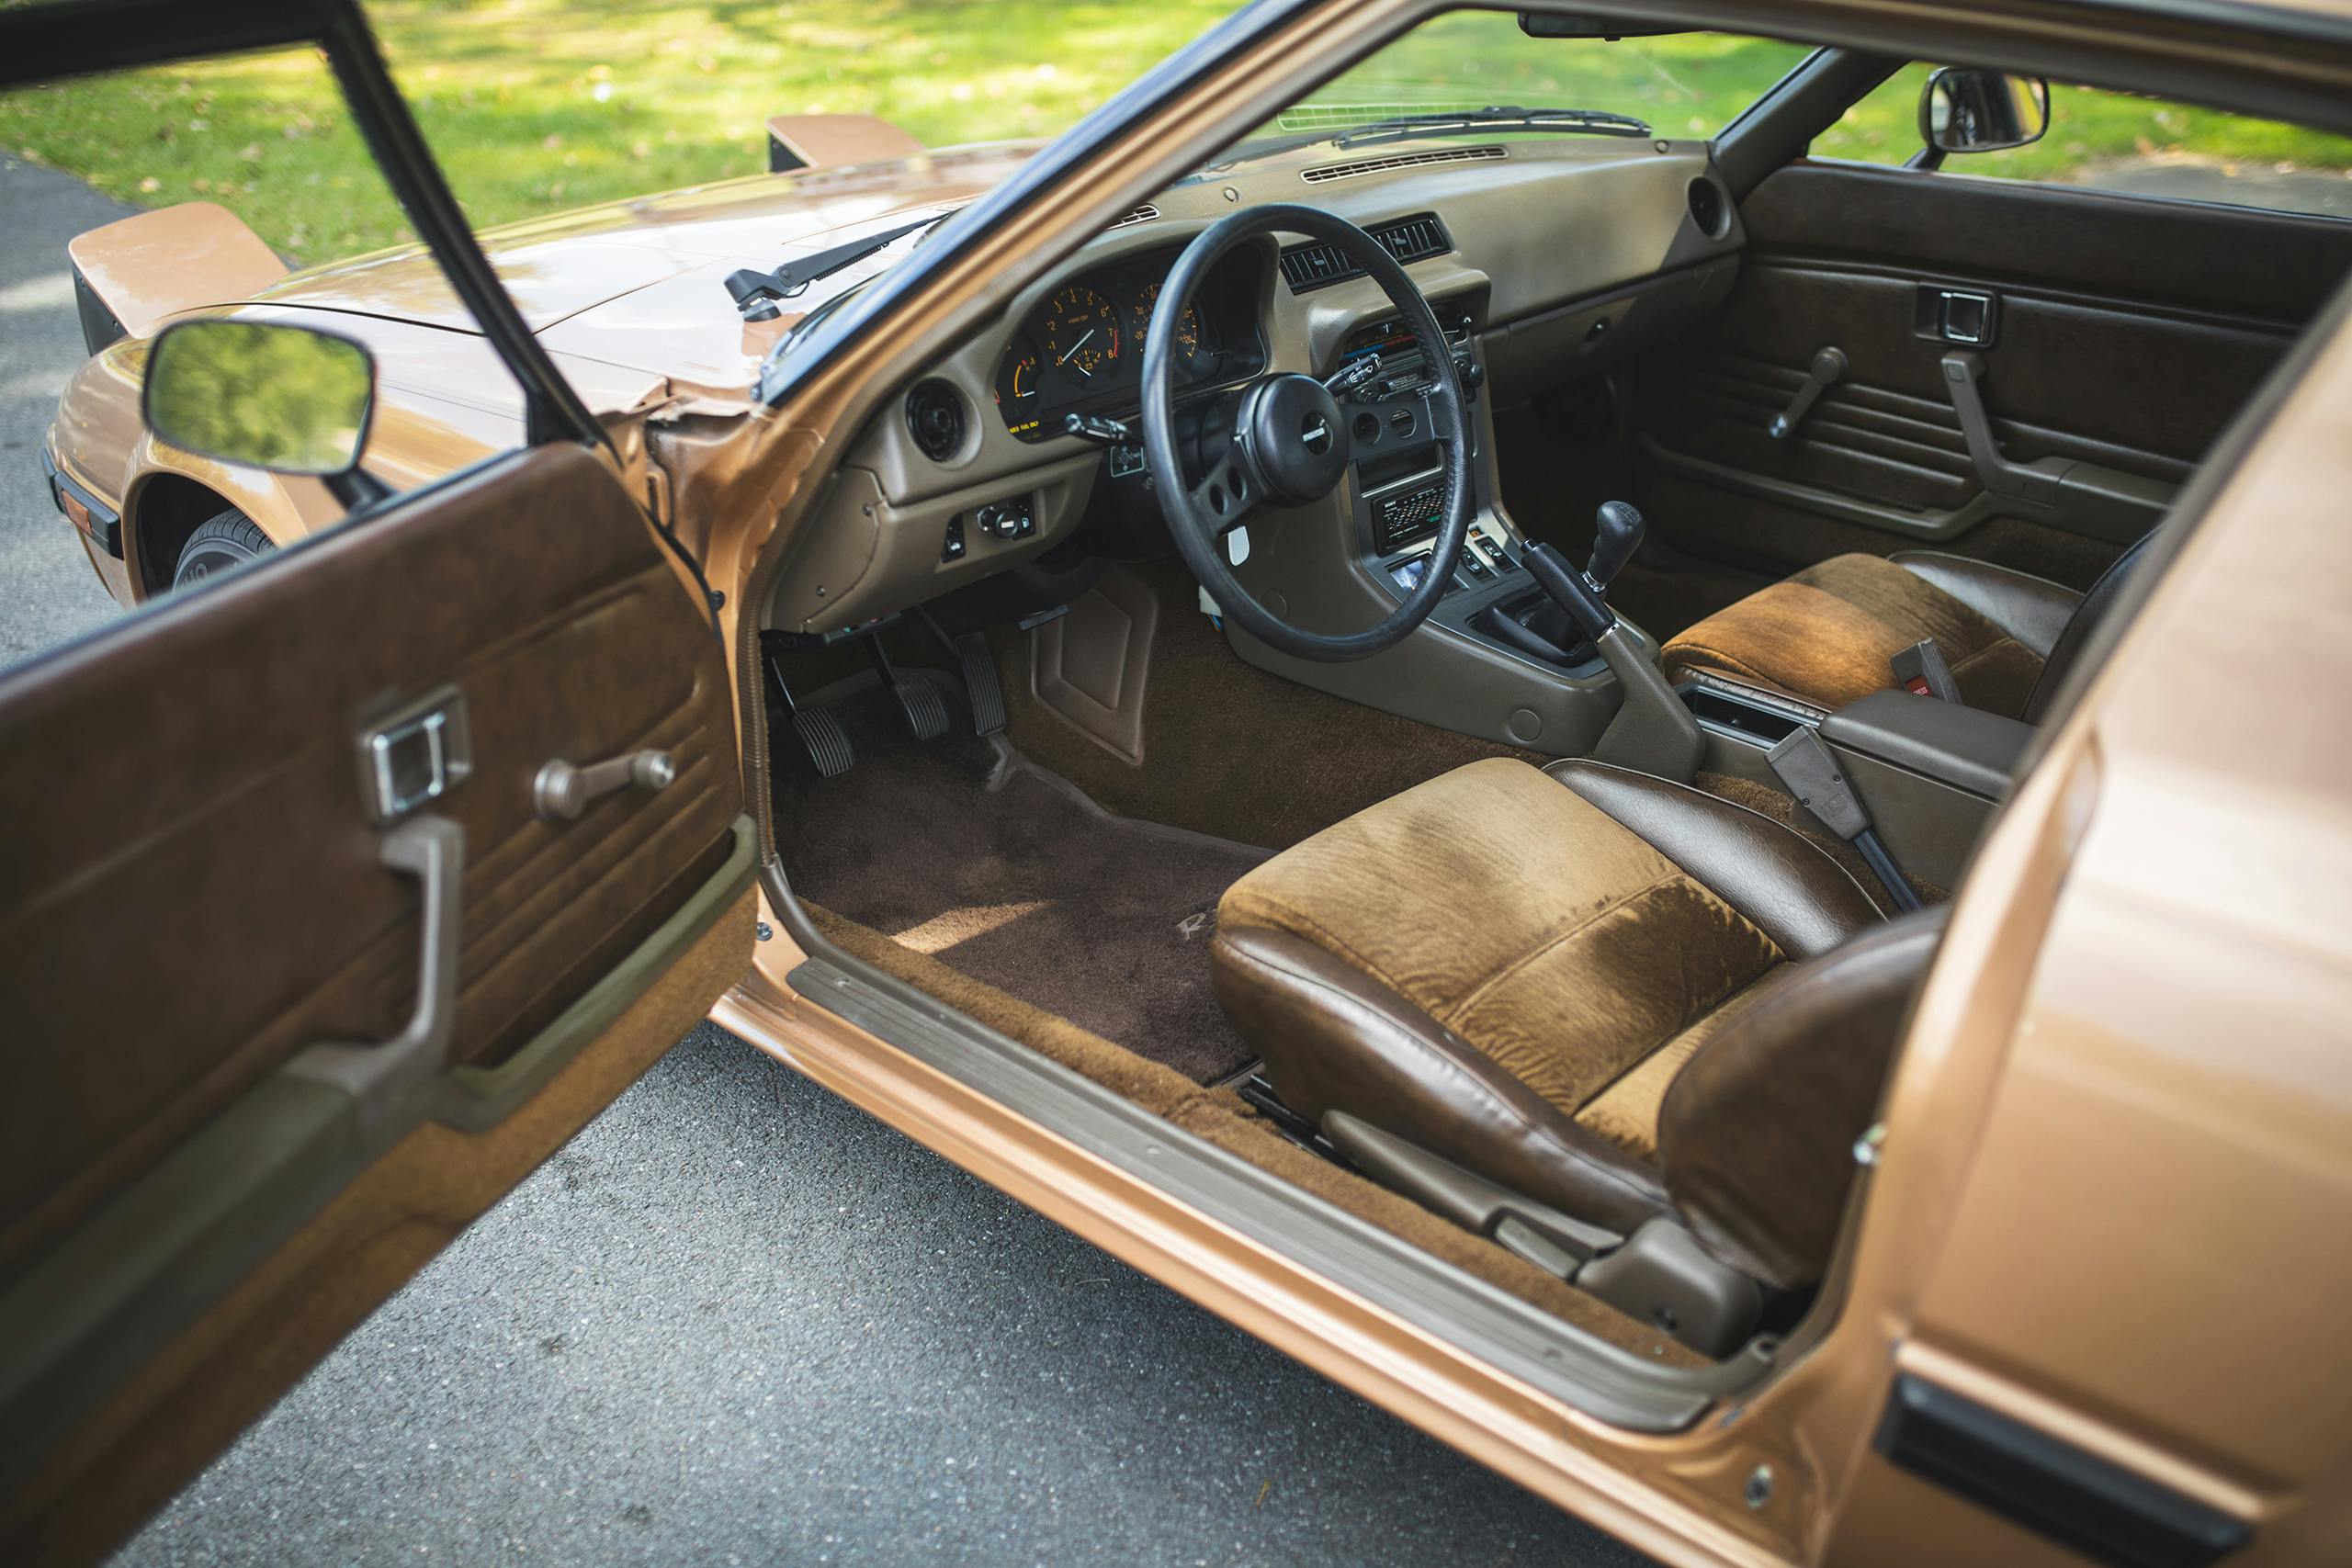 1983 Mazda RX7 interior front angle driver door open